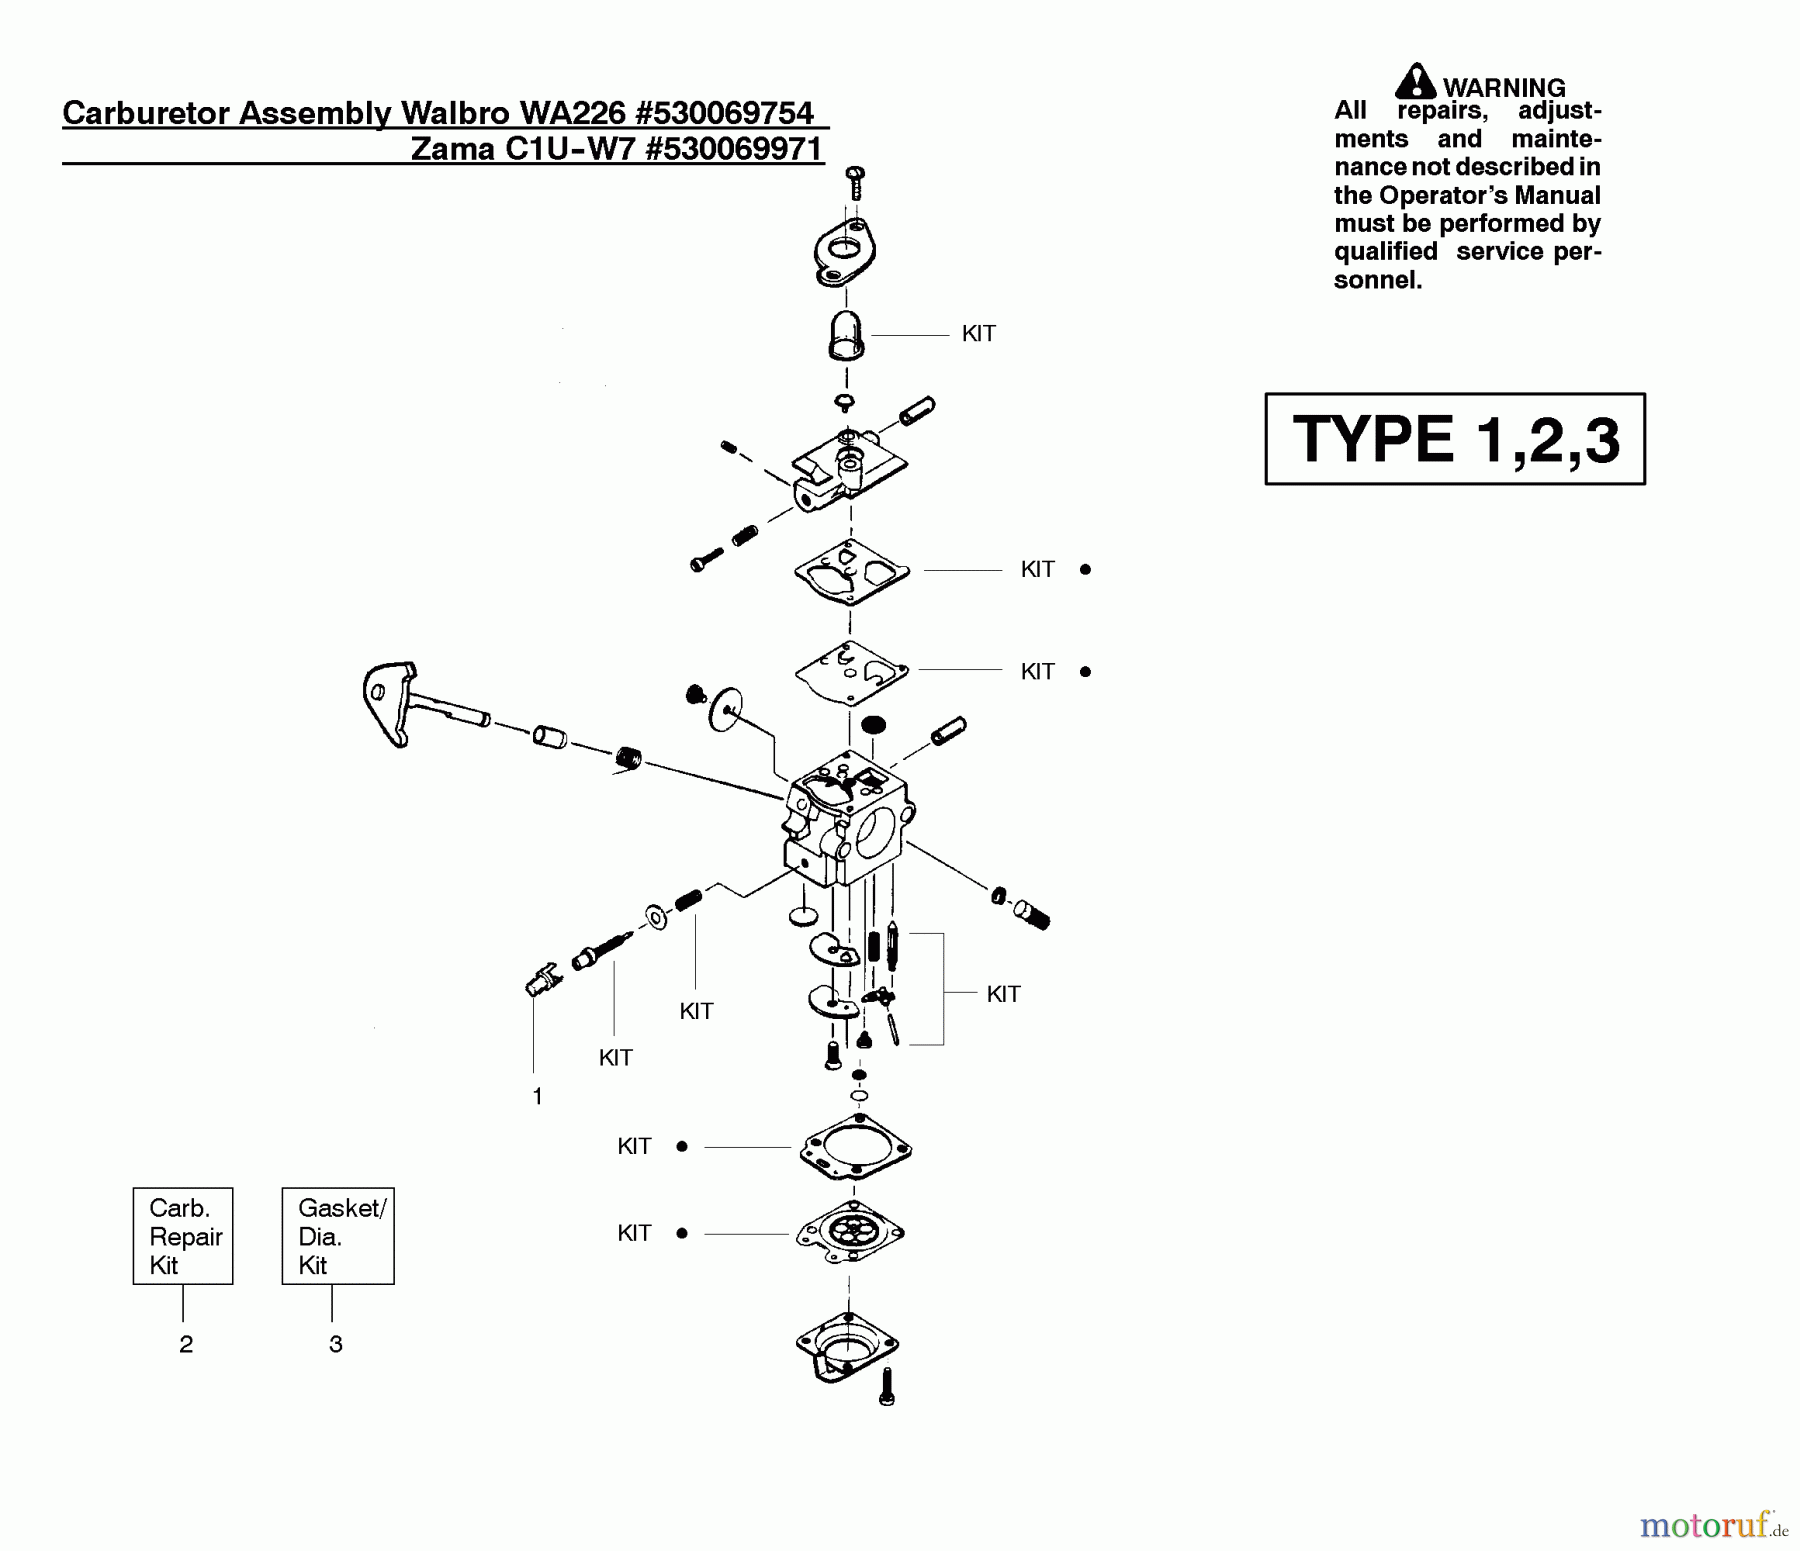  Poulan / Weed Eater Motorsensen, Trimmer PL500 (Type 2) - Weed Eater String Trimmer Carburetor Assembly (WT226) P/N 530069754, (Zama C1U-W70) P/N 530069971